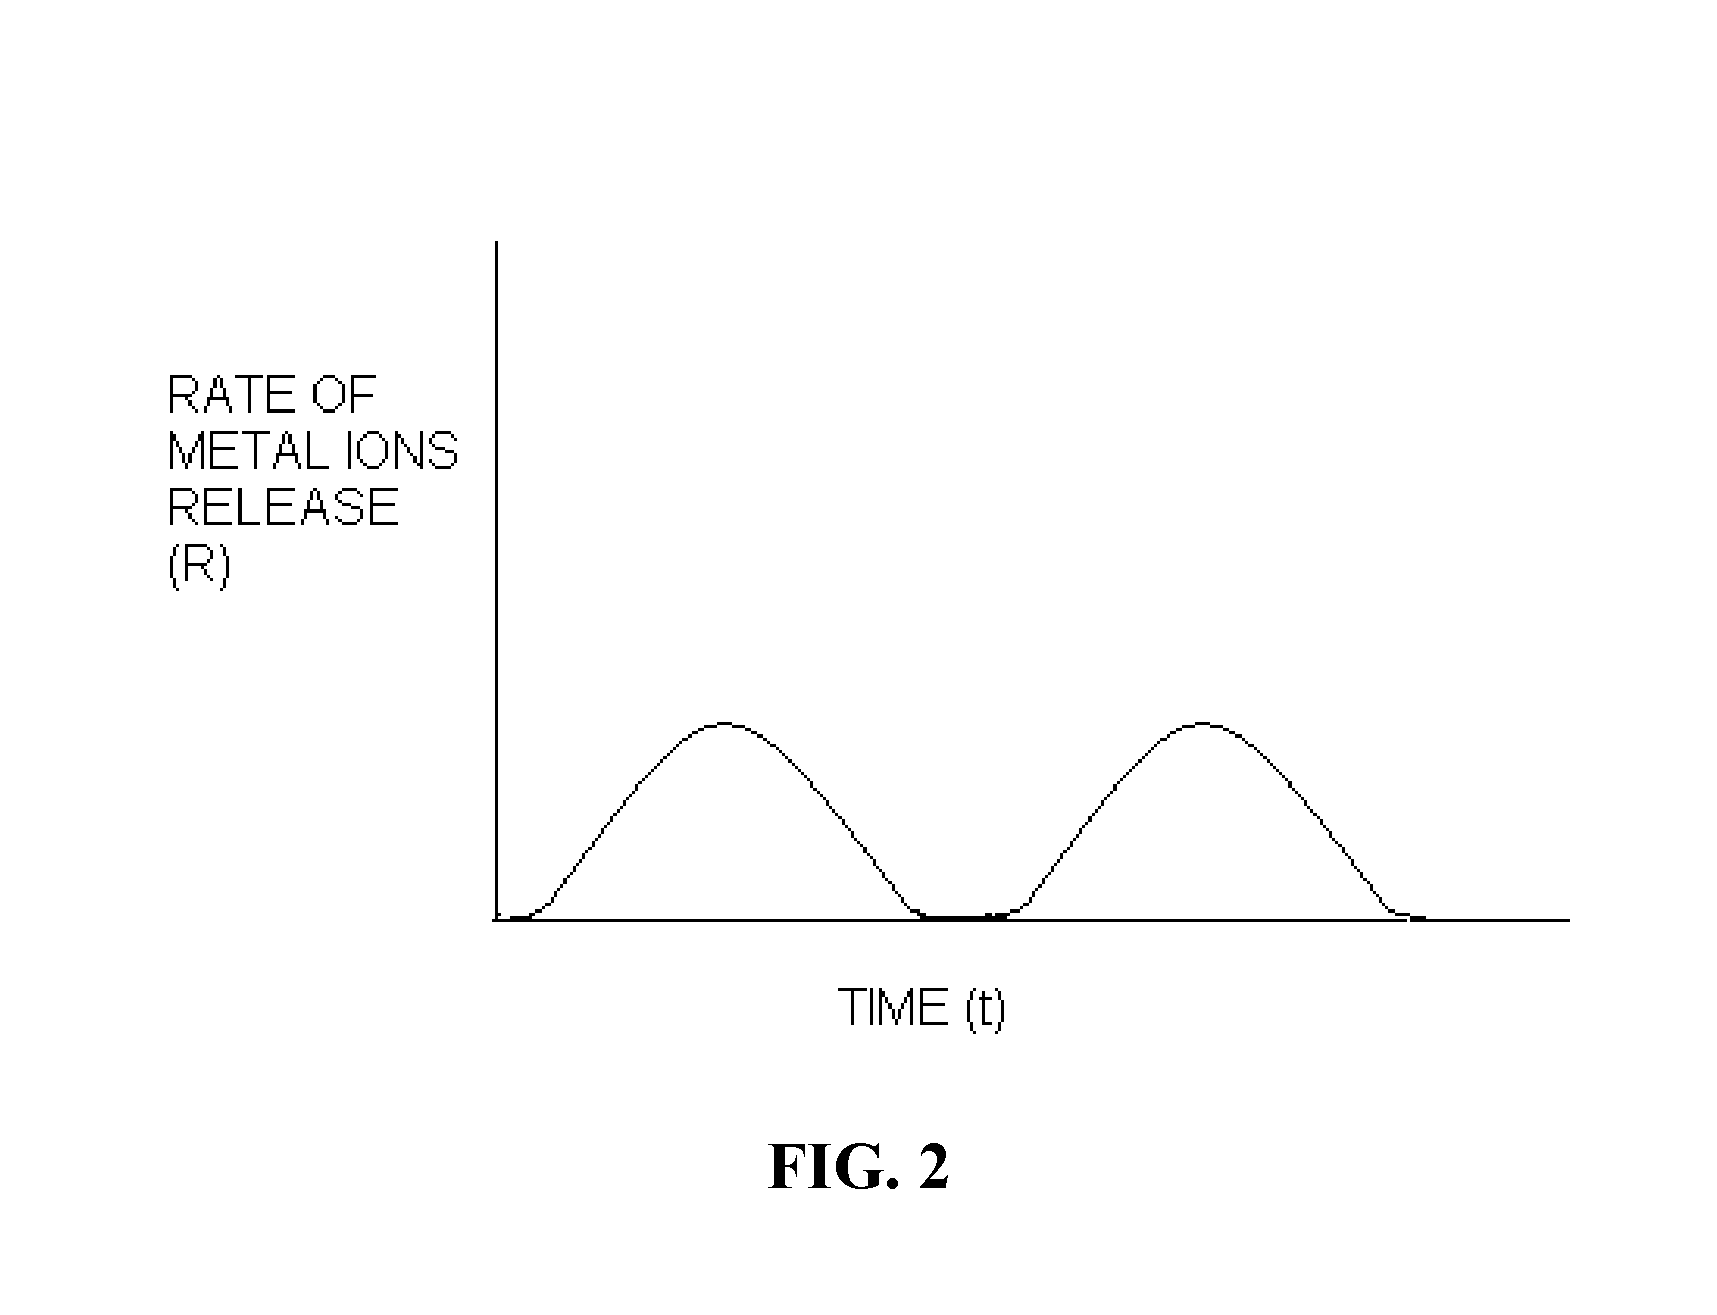 Polymer chelator conjugates